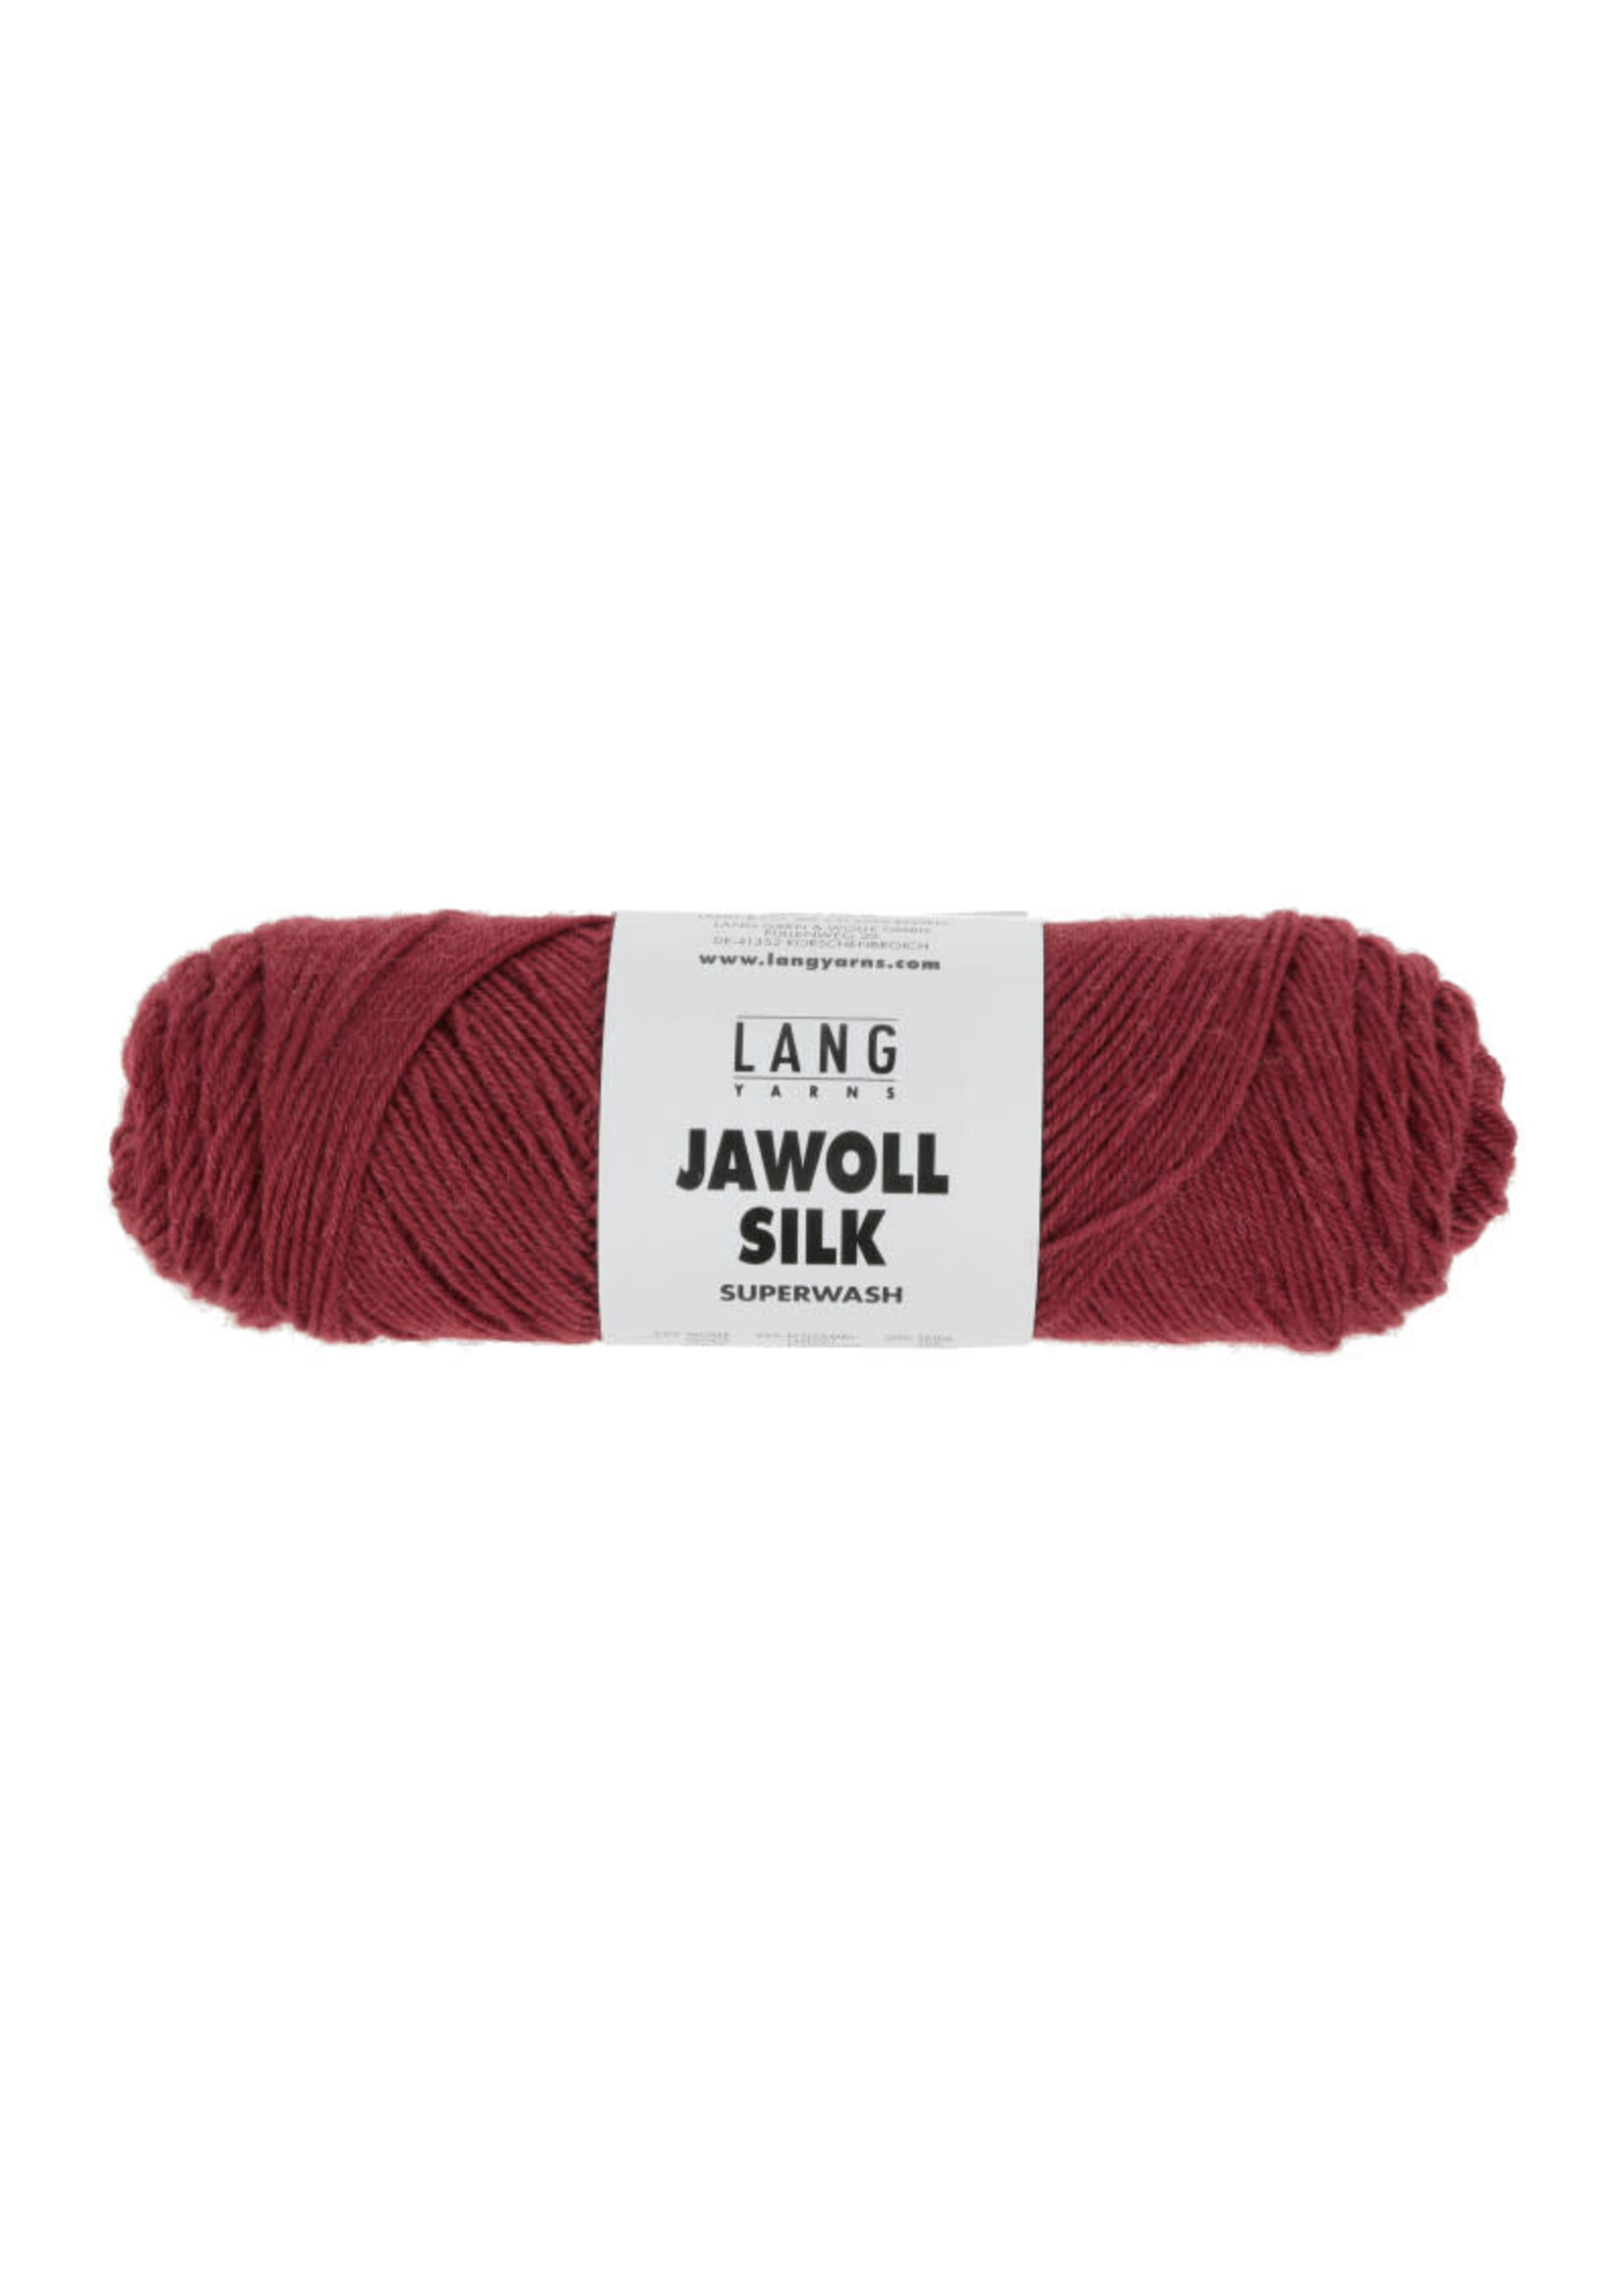 LangYarns Jawoll Silk - 0161 burgundy